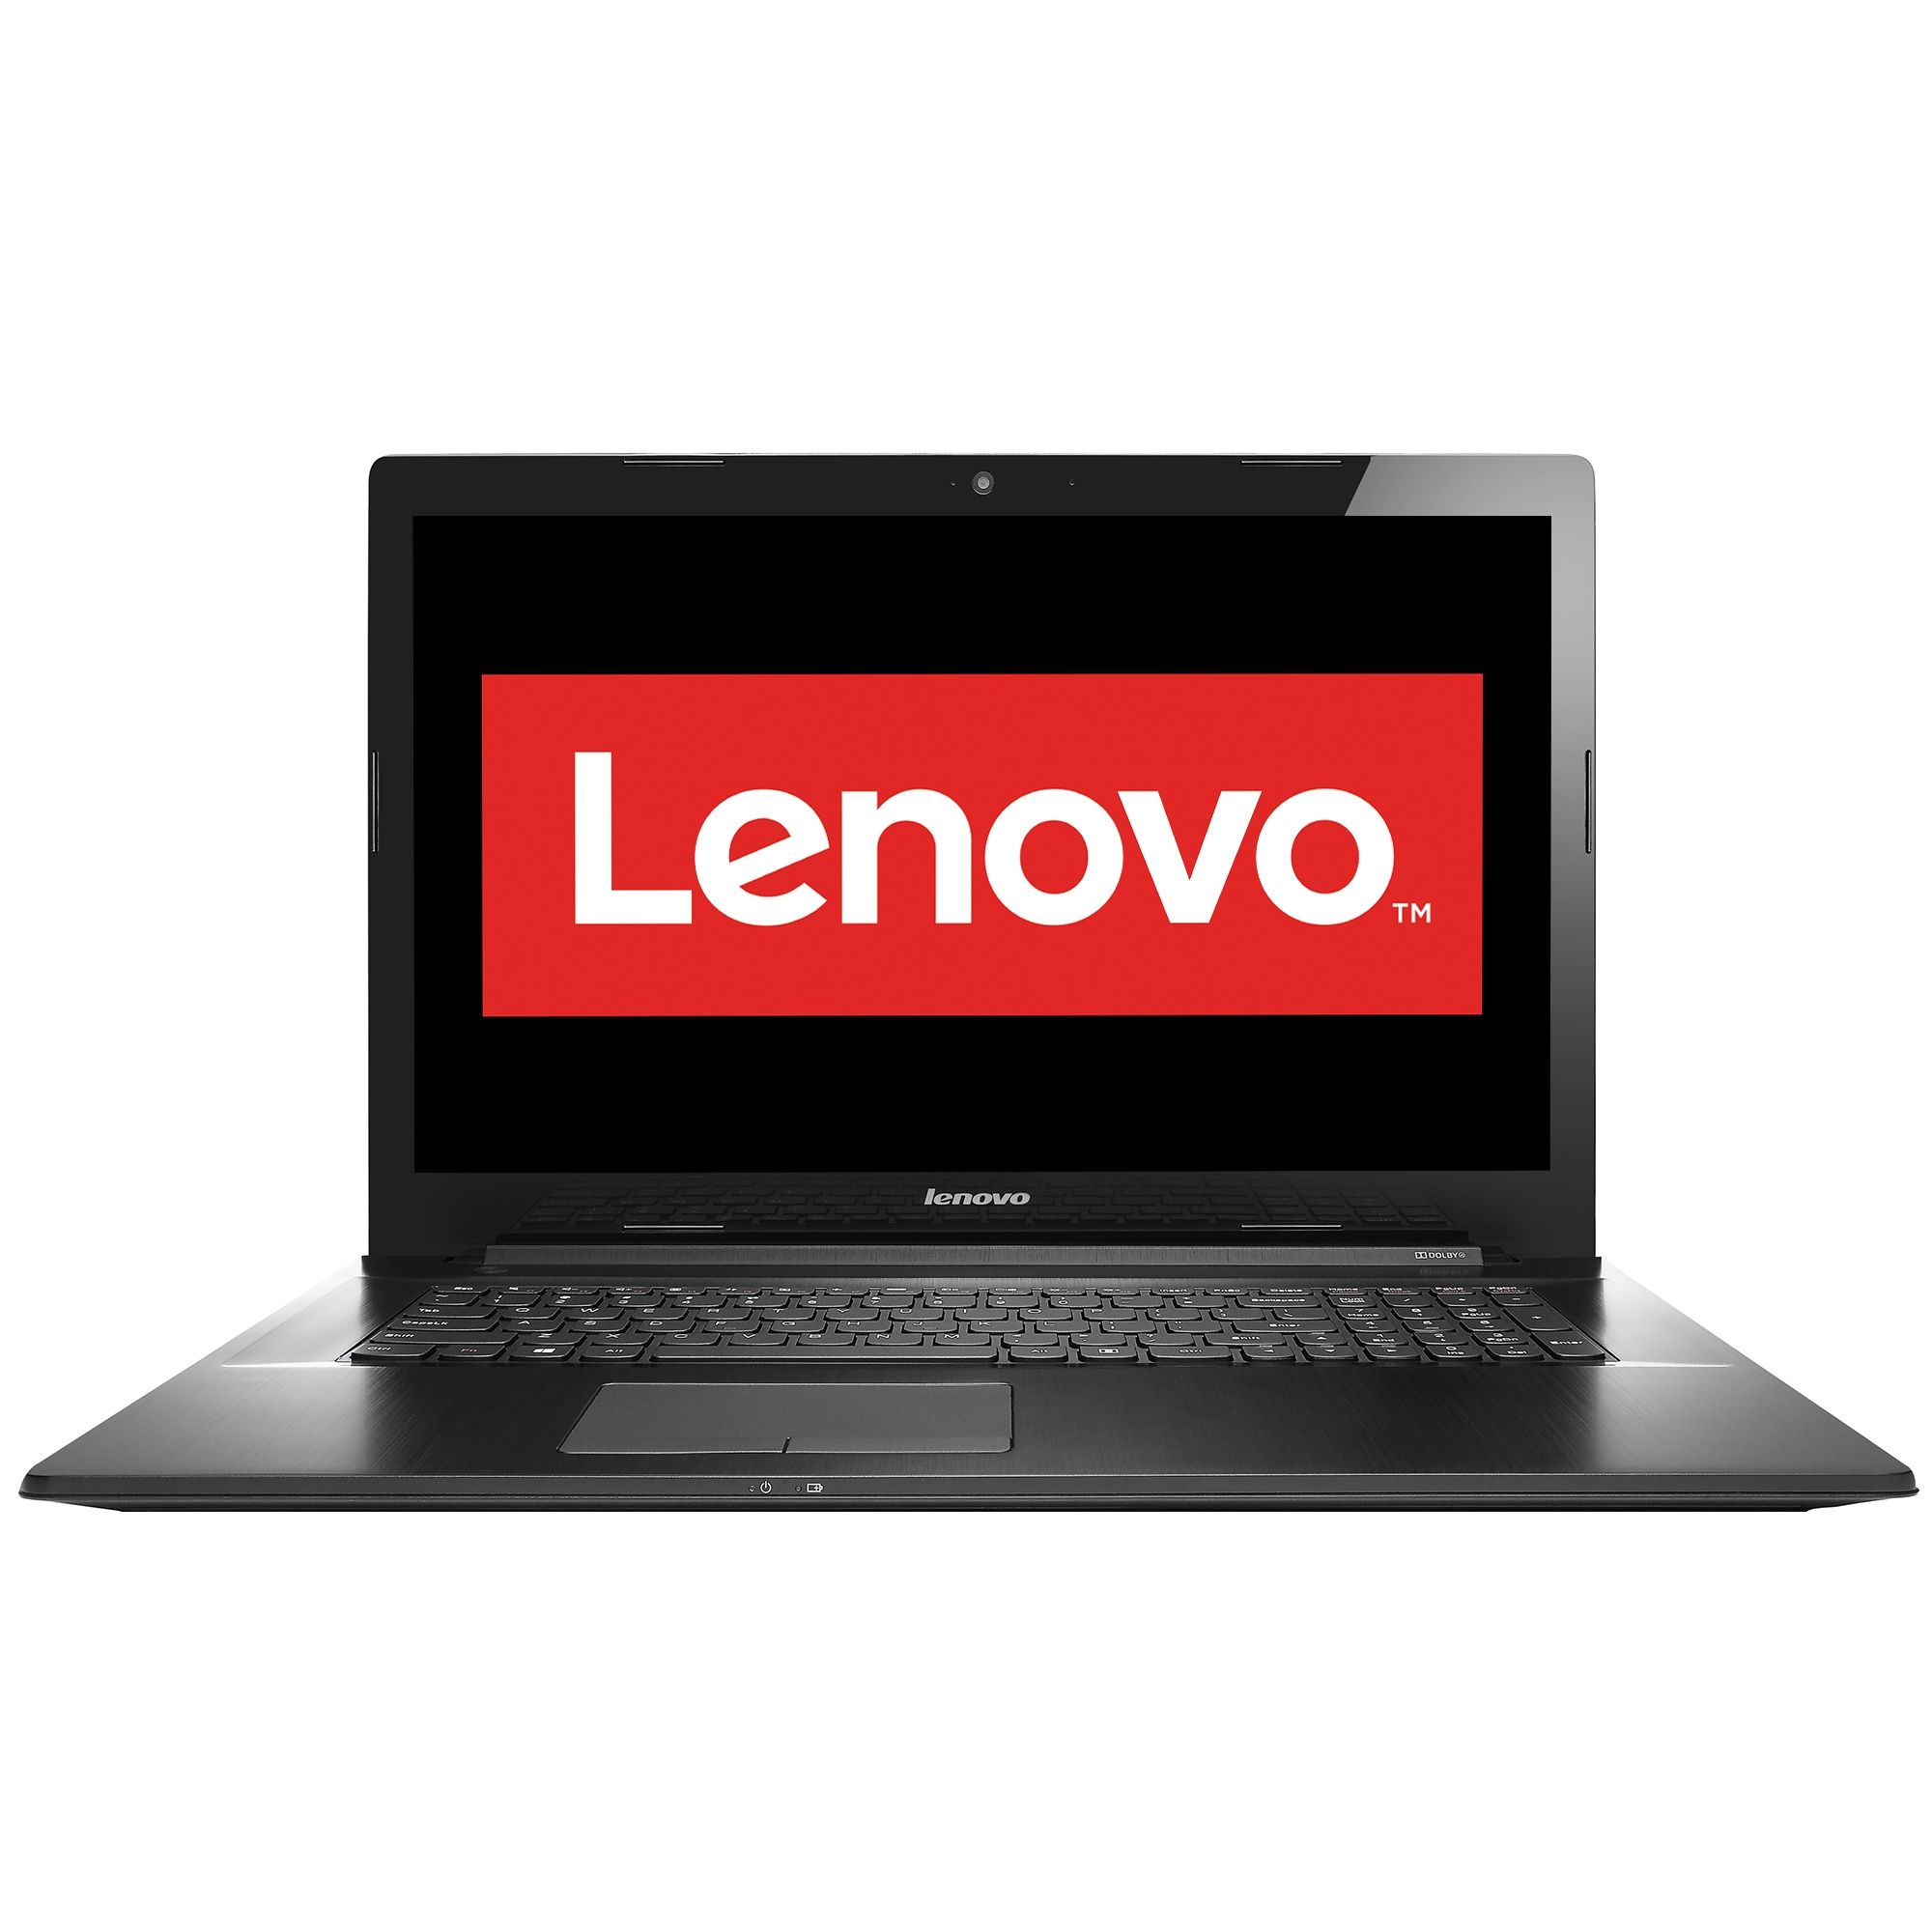  Laptop Lenovo G70-80, Intel Core i3-5005U, 4GB DDR3, HDD 1TB, nVidia GeForce 920M 2GB, Free DOS 